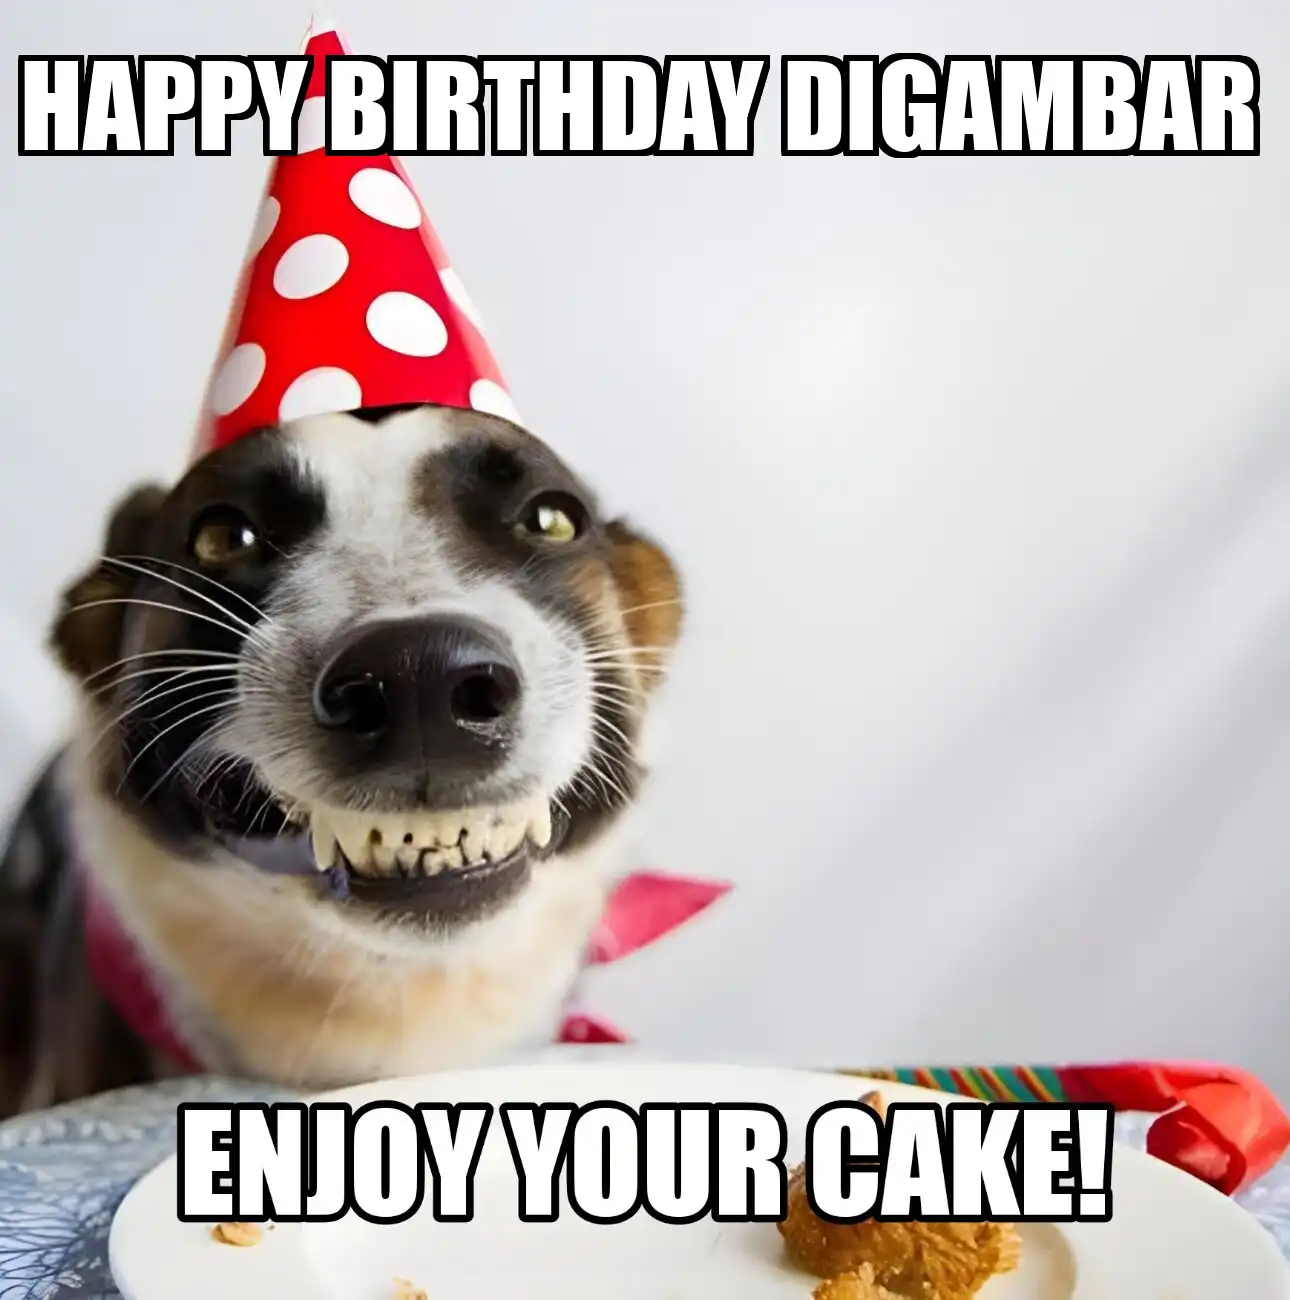 Happy Birthday Digambar Enjoy Your Cake Dog Meme